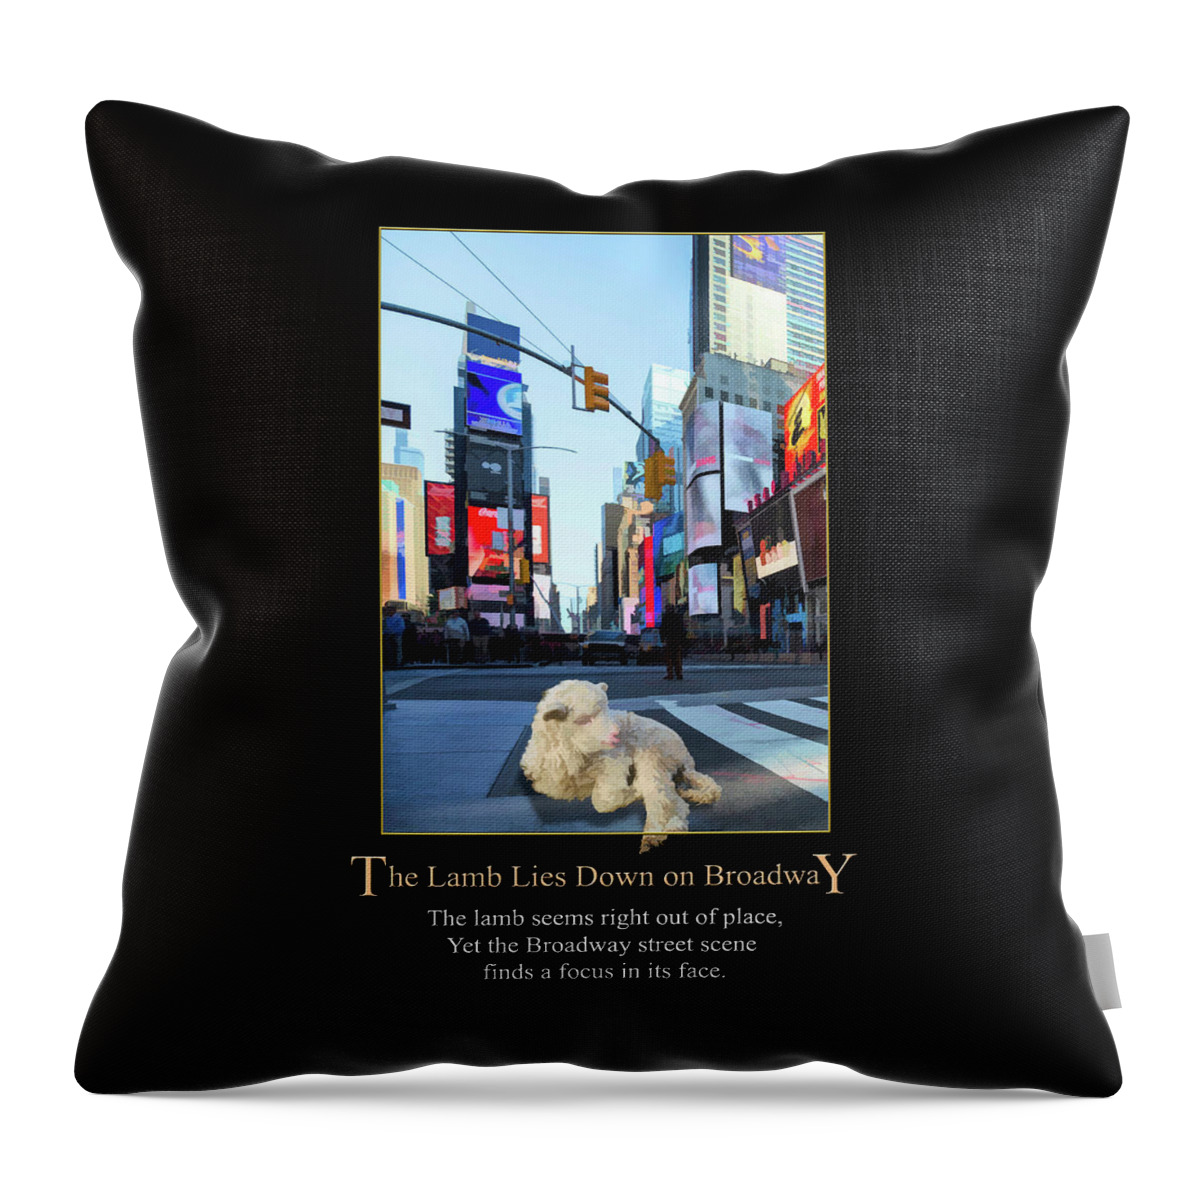 The Lamb Lies Down On Broadway Throw Pillow featuring the digital art The Lamb Lies Down on Broadway by John Haldane